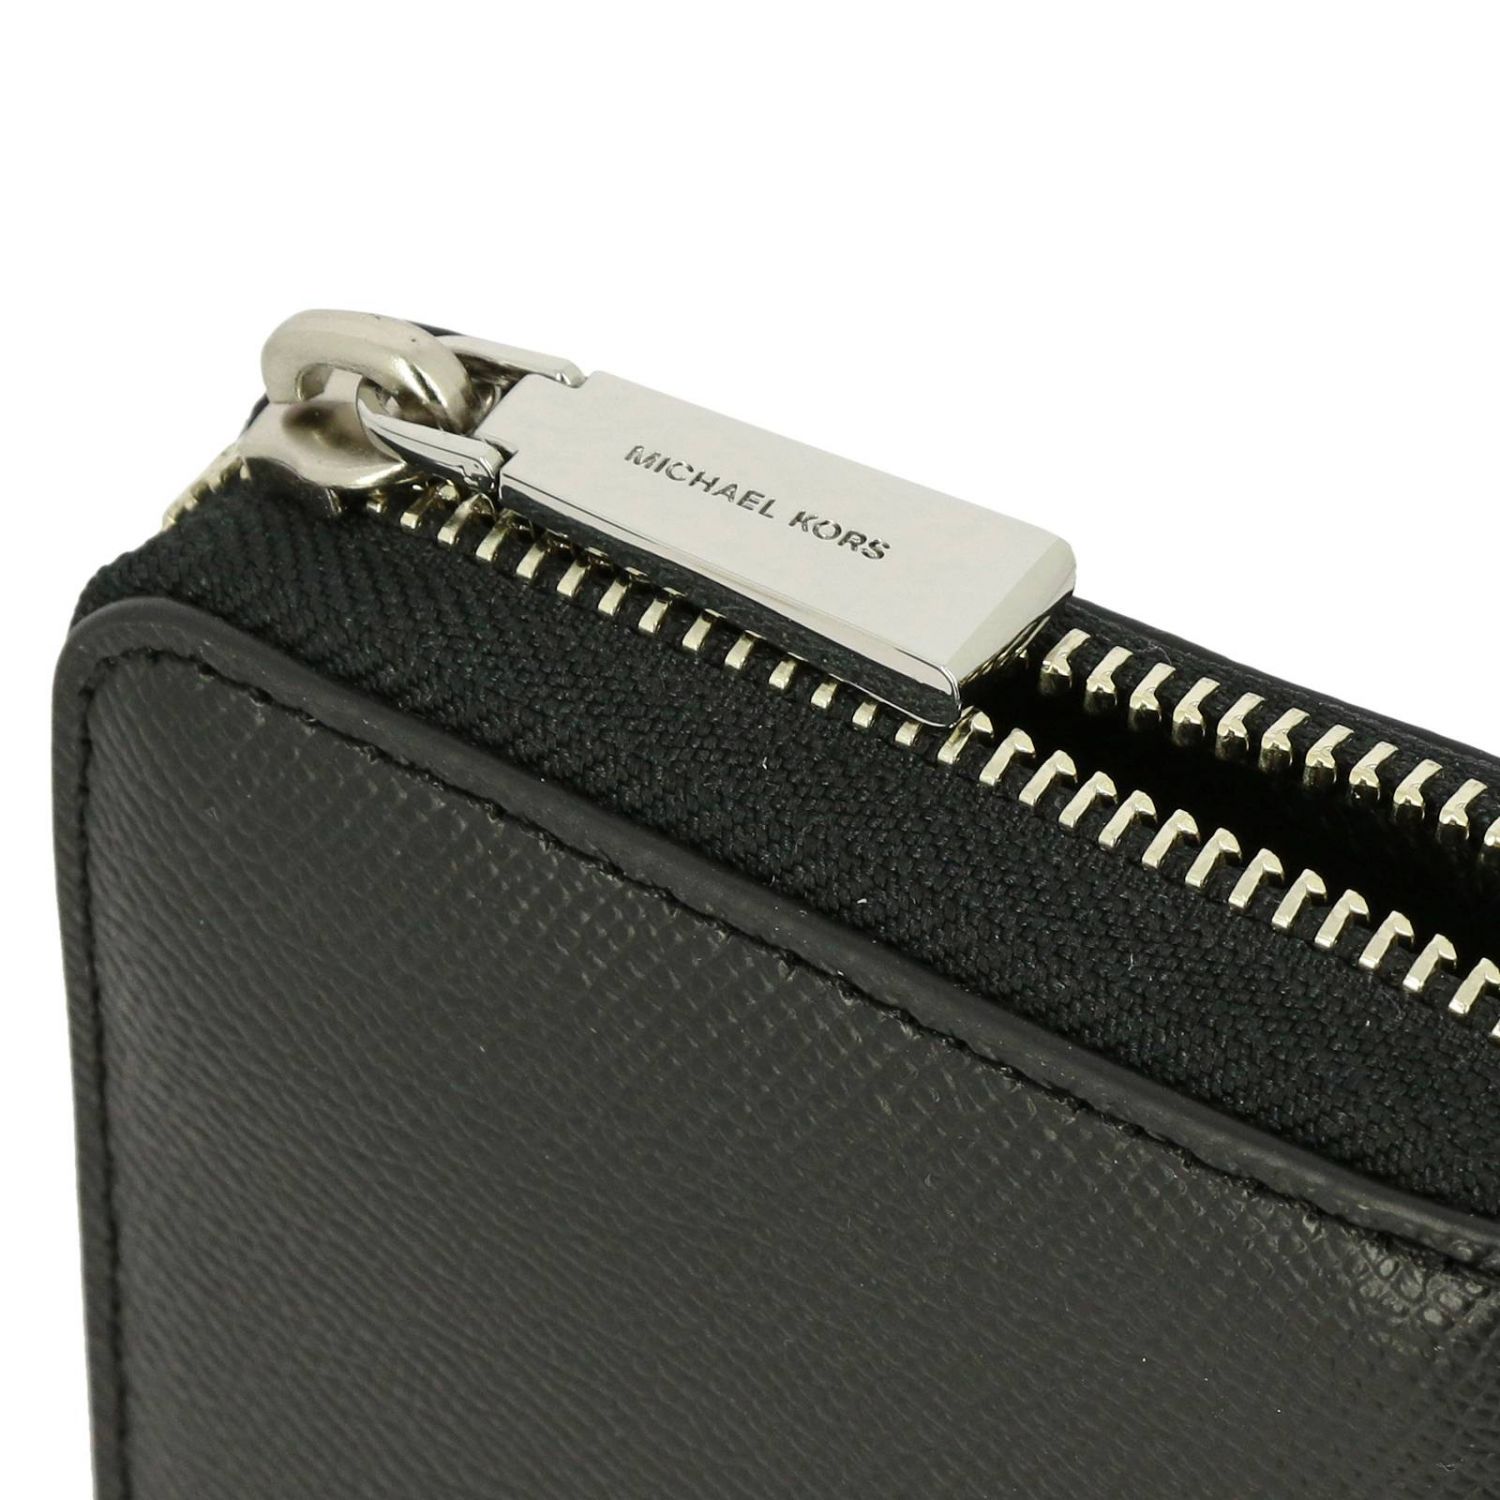 Michael Kors Outlet: Michael continental leather wallet - Black ...